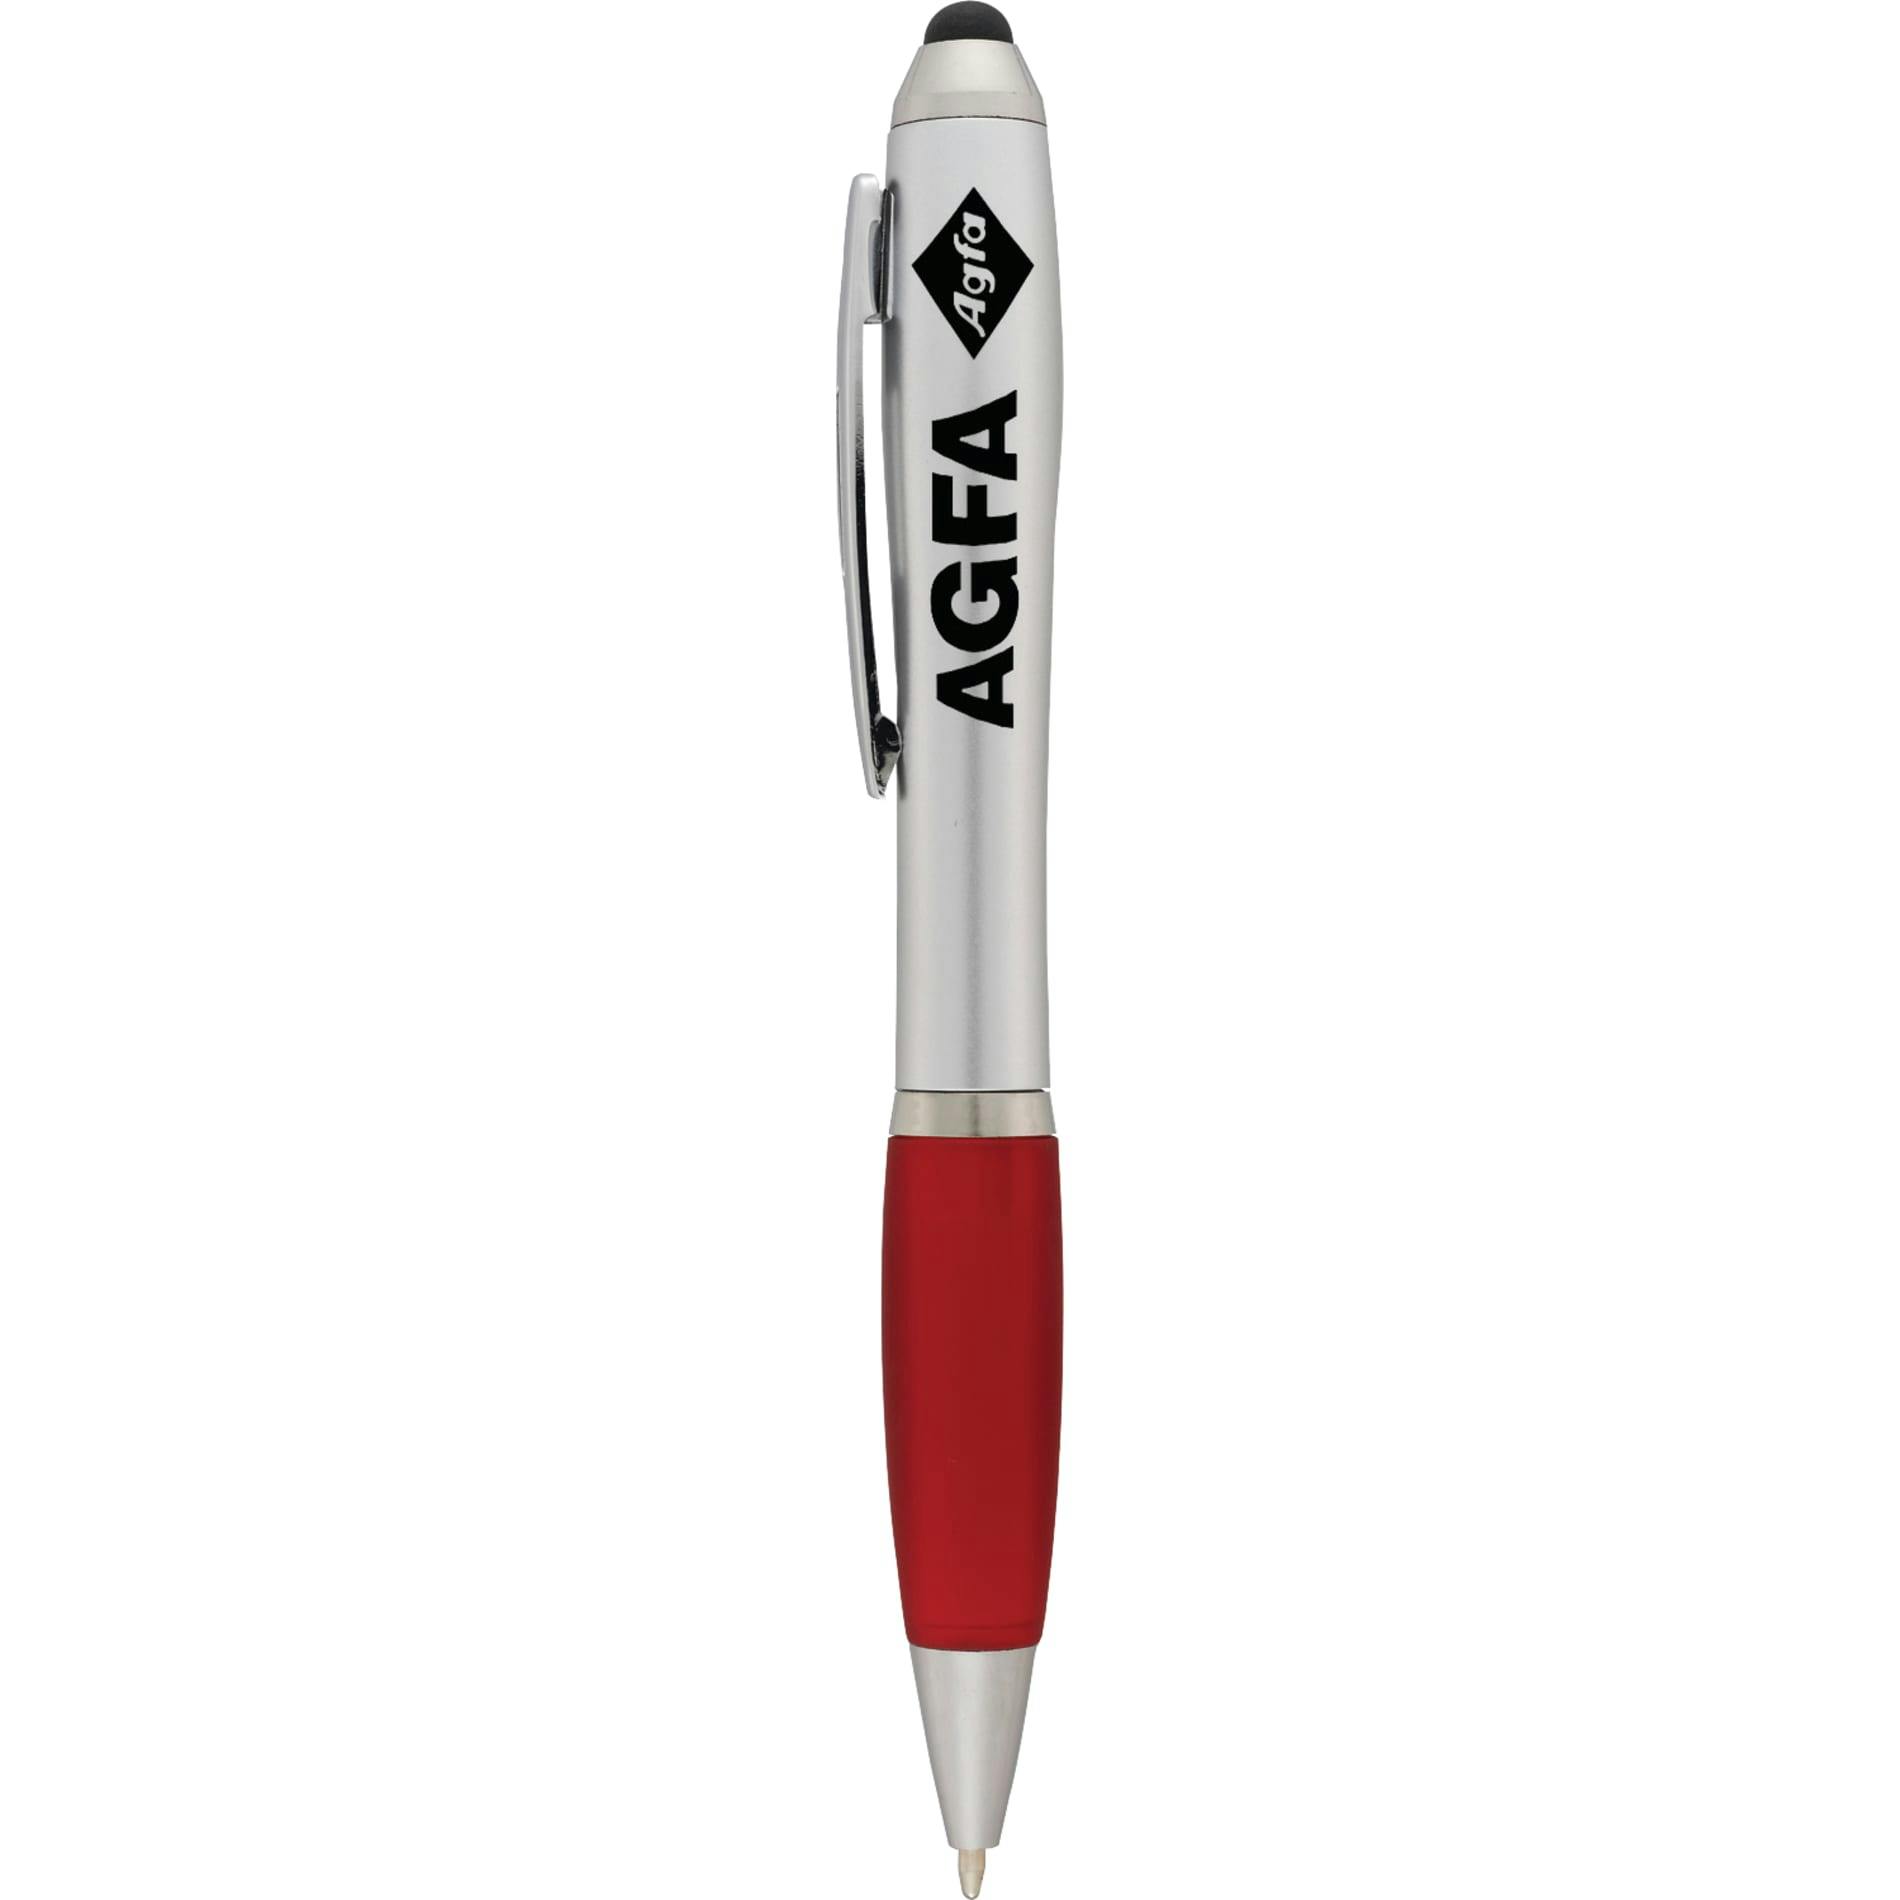 Nash Ballpoint Pen-Stylus - additional Image 1